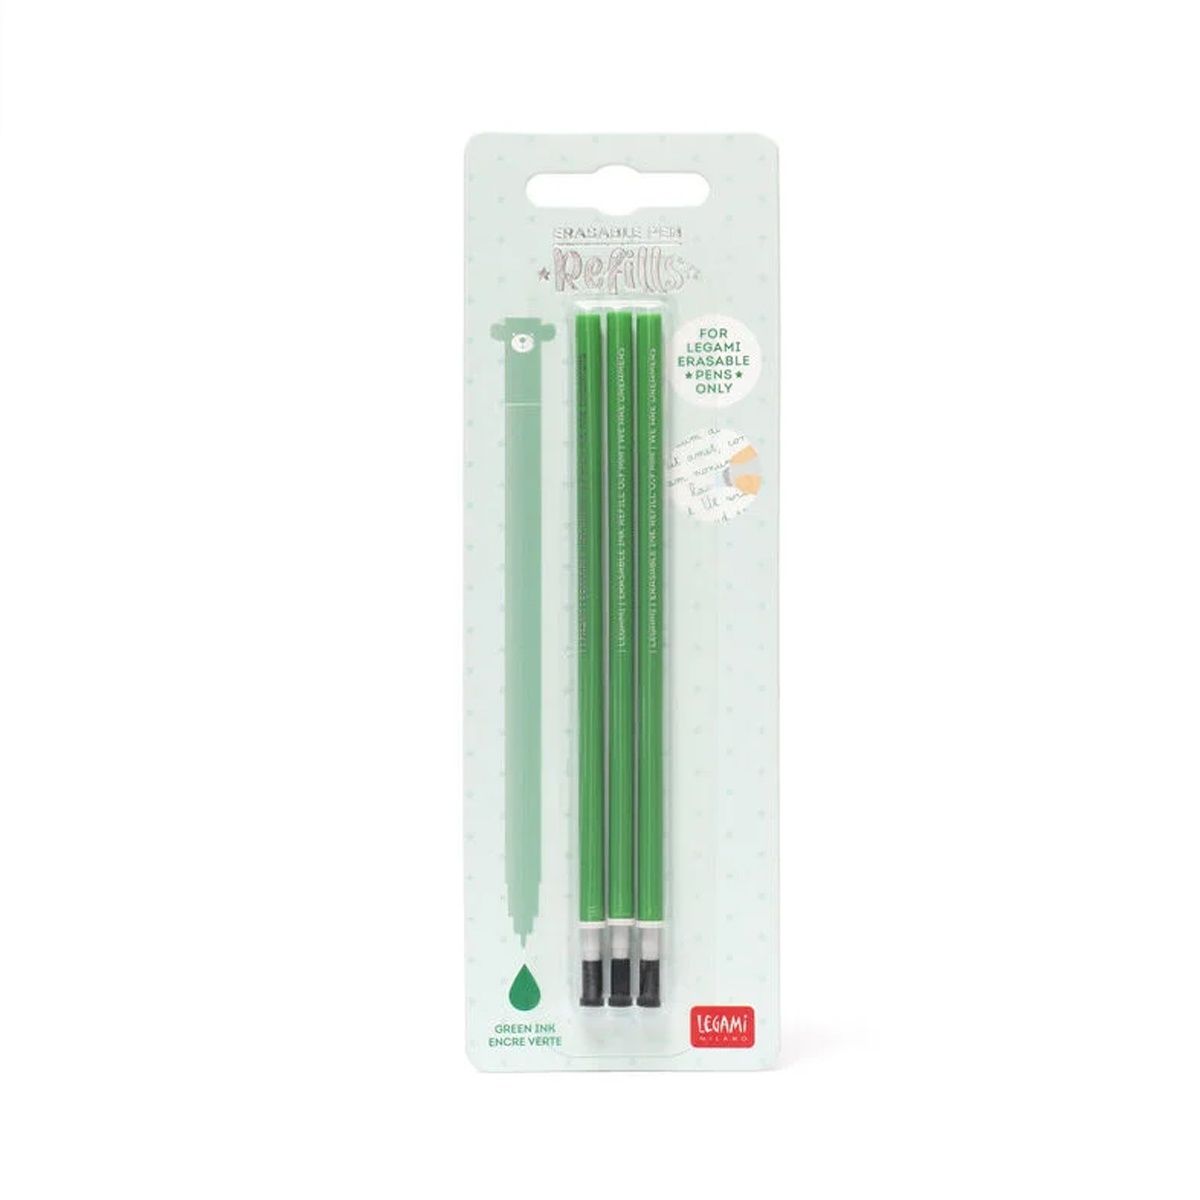 3 Ersatzminen für löschbaren Gelstift - Erasable Pen grün